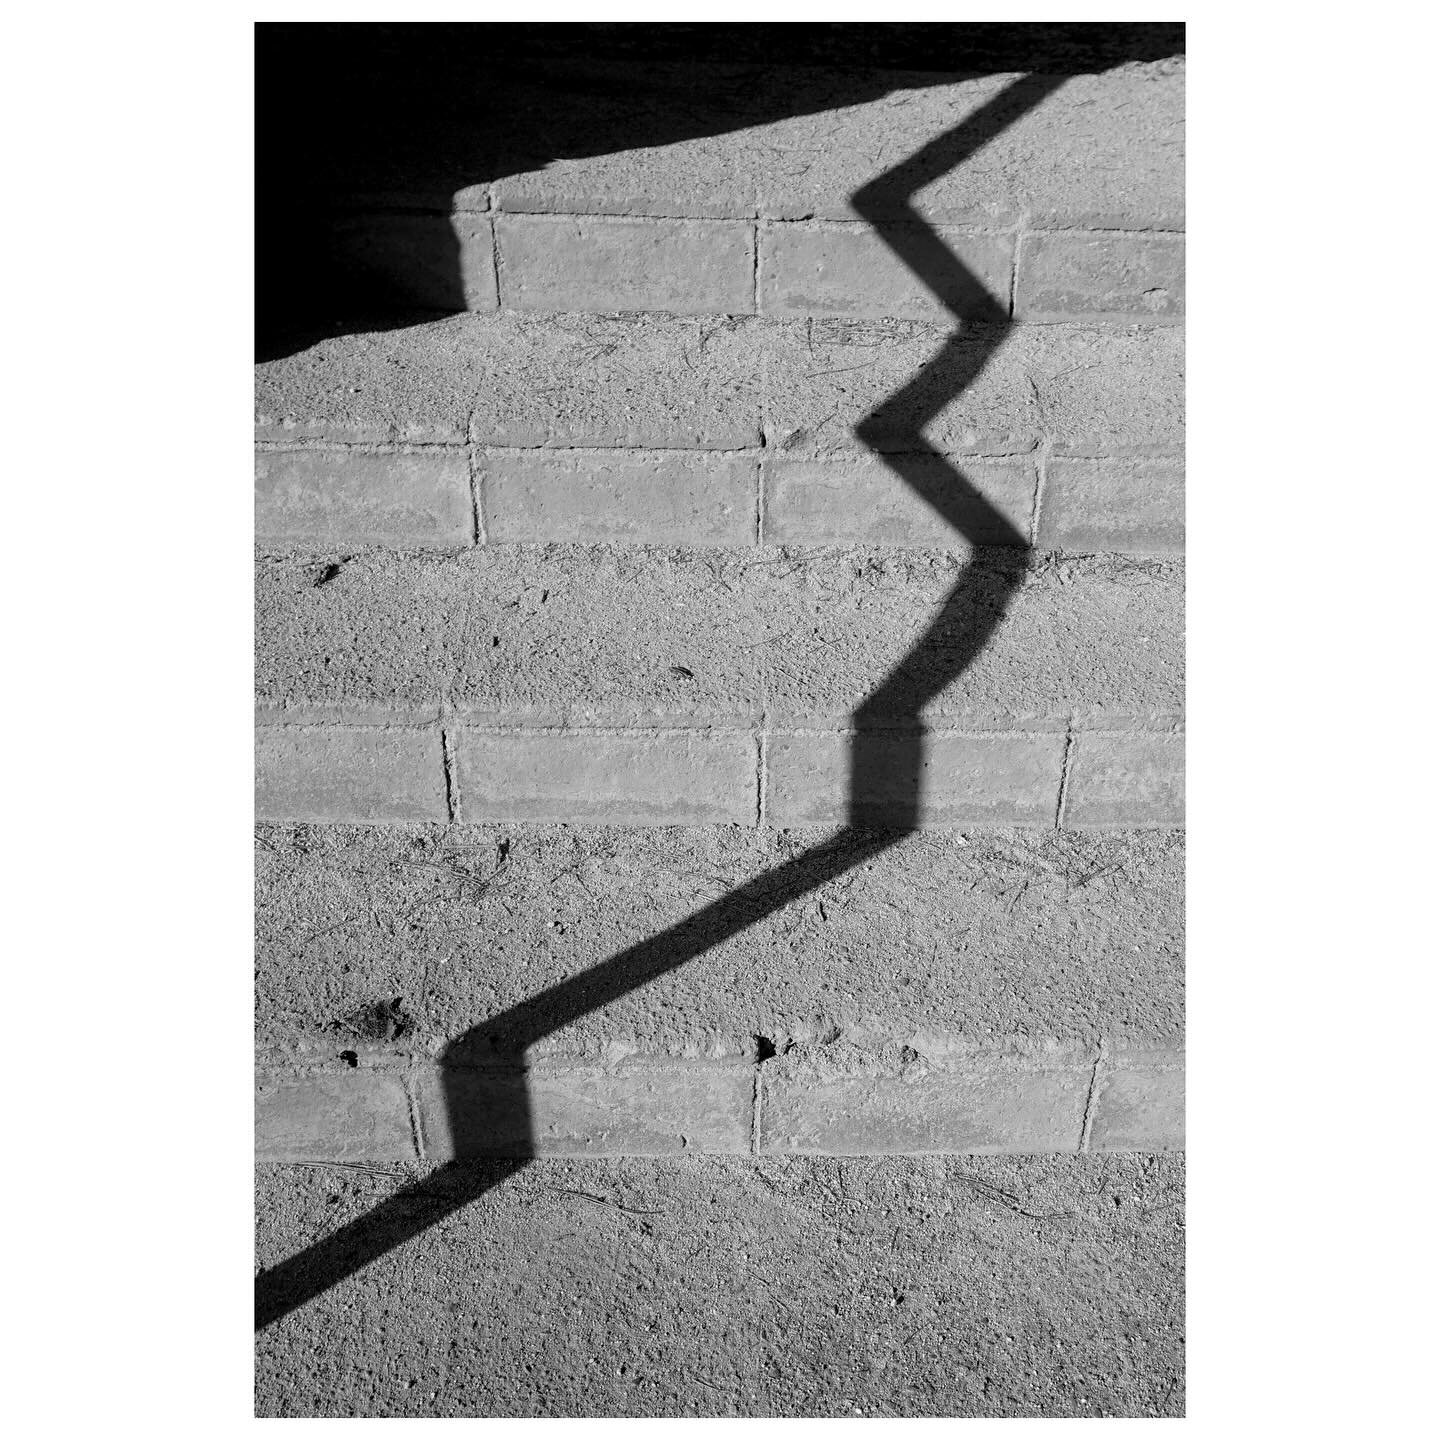 Sombras y luces
.
.
.
.
.
.
.
#LightAndShadow #sleekelegance #MinimalistGrammer #MinimalZine #minimablu #LearnMinimalism #minimal_greece #jj_geometry #minimal_perfection #pocket_minimal #tv_simplicity #contemporaryartcurator #bnwminimalismmag #wtns #